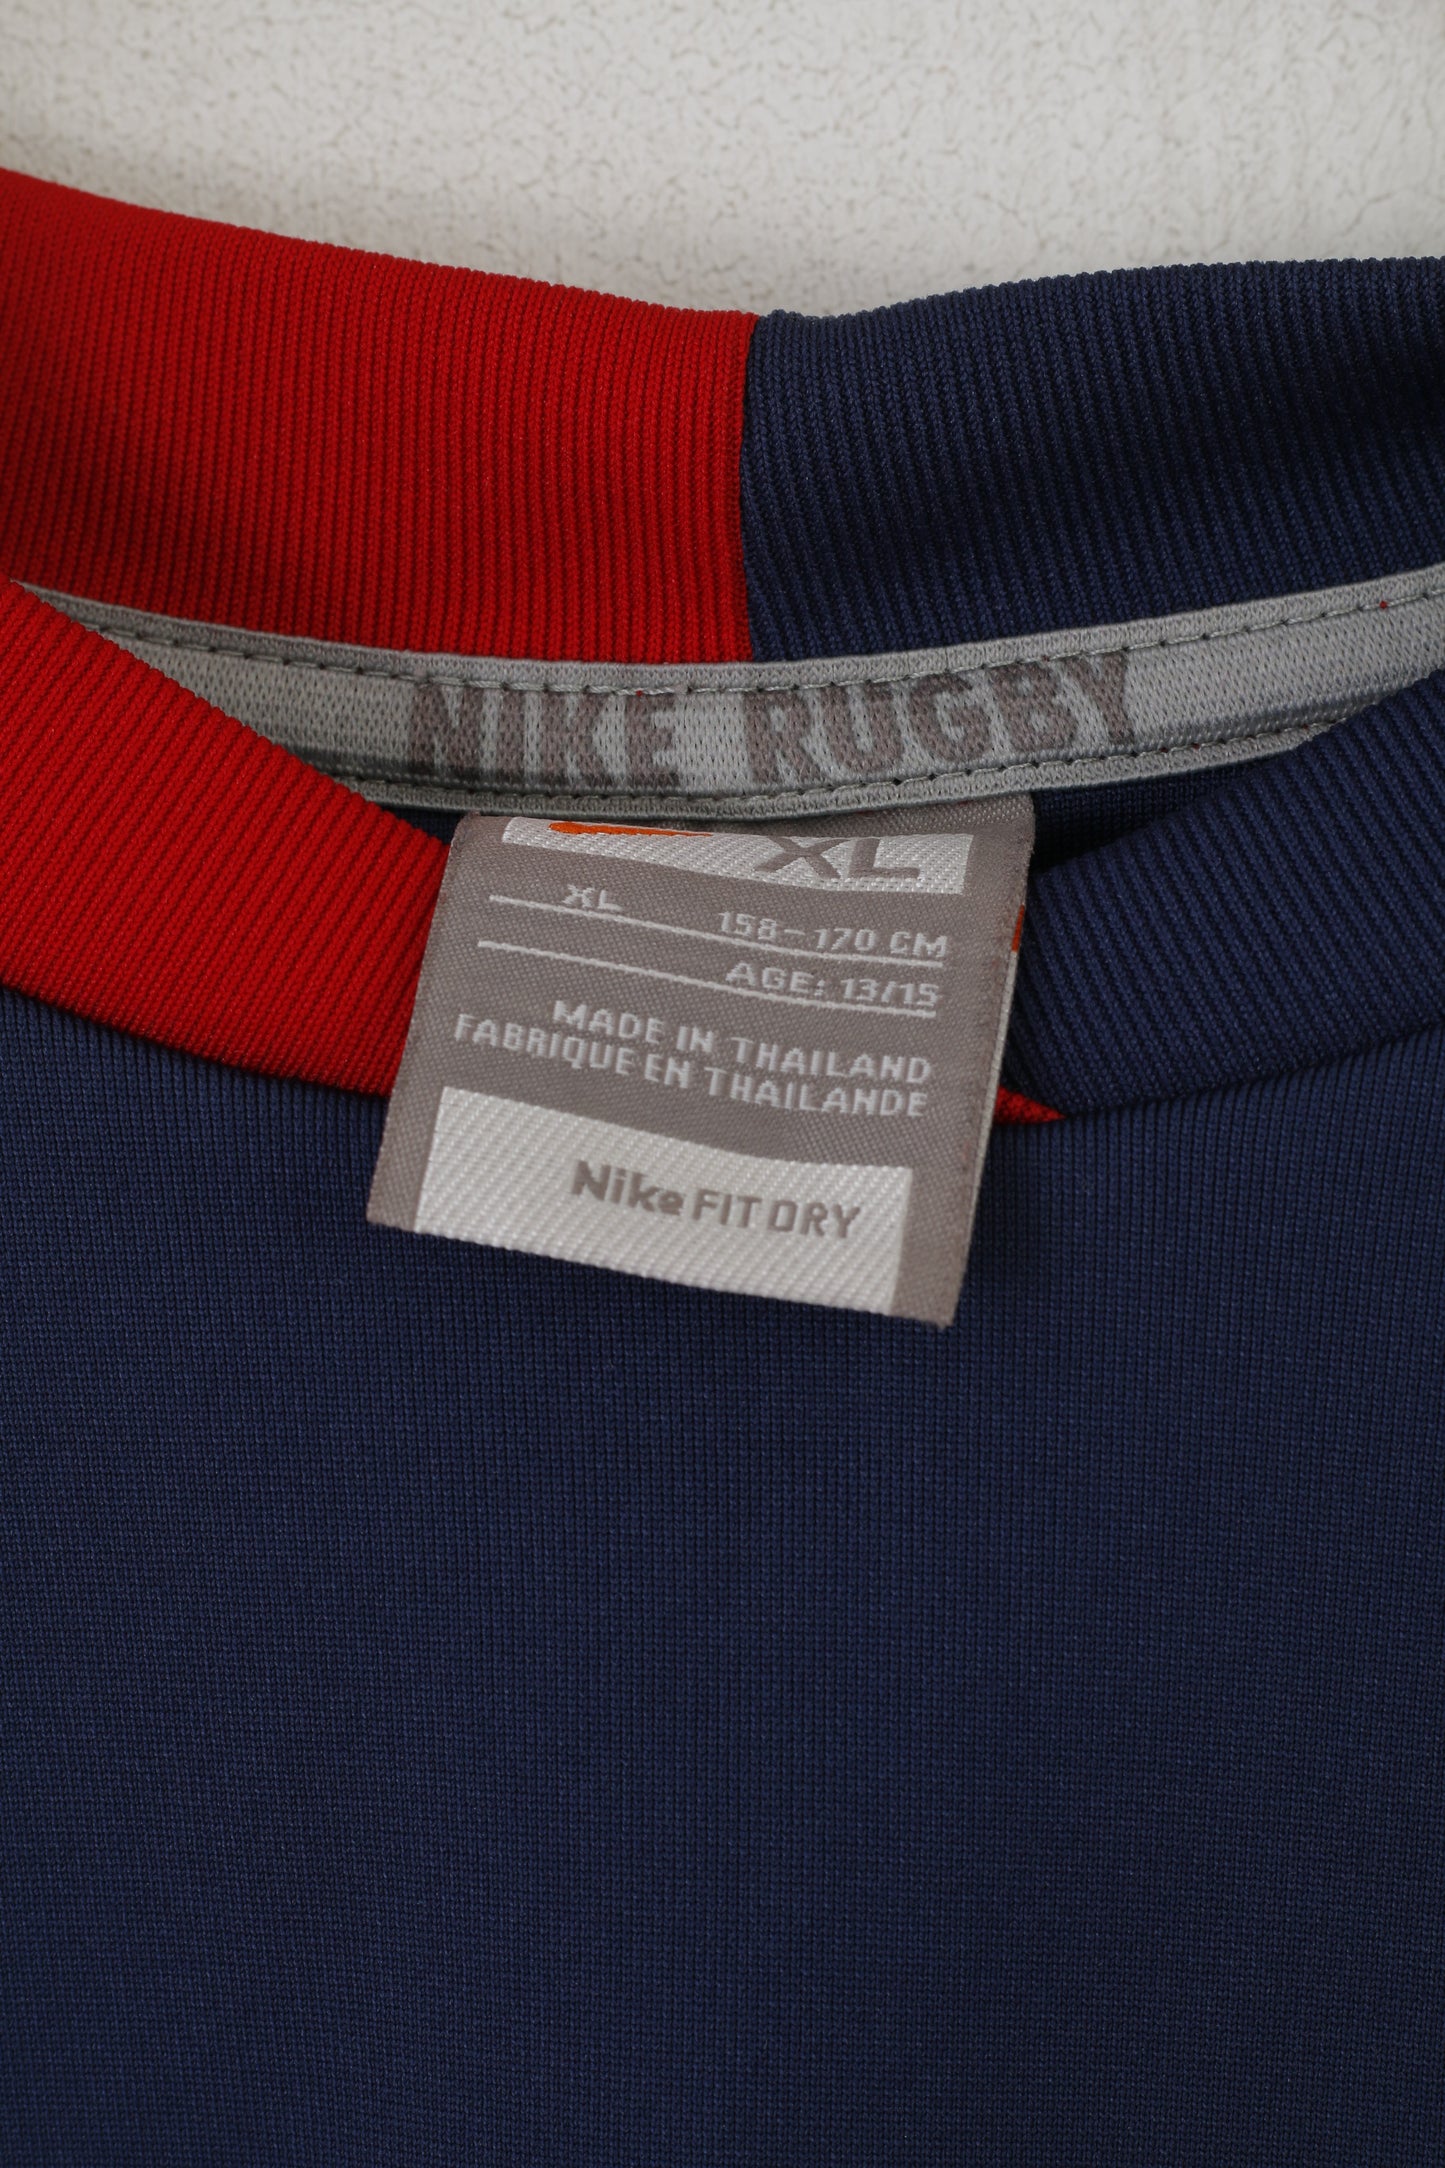 Nike Rugby Youth XL 158-170cm Shirt Navy ESPN Dri-Fir Long Sleeved Jersey Top